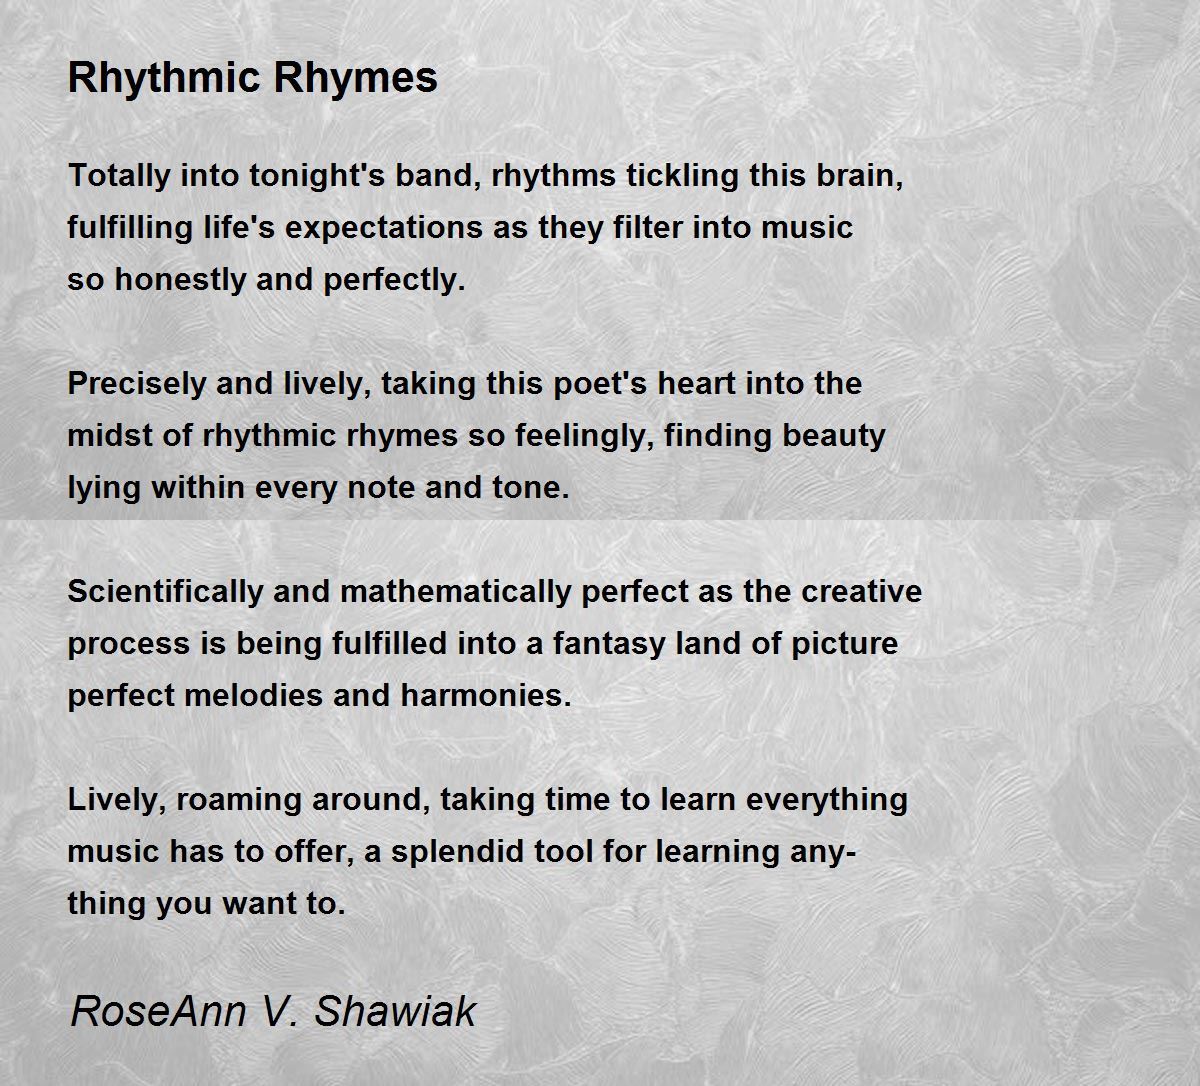 Reflections Of Rhythm - Reflections Of Rhythm Poem by RoseAnn V. Shawiak